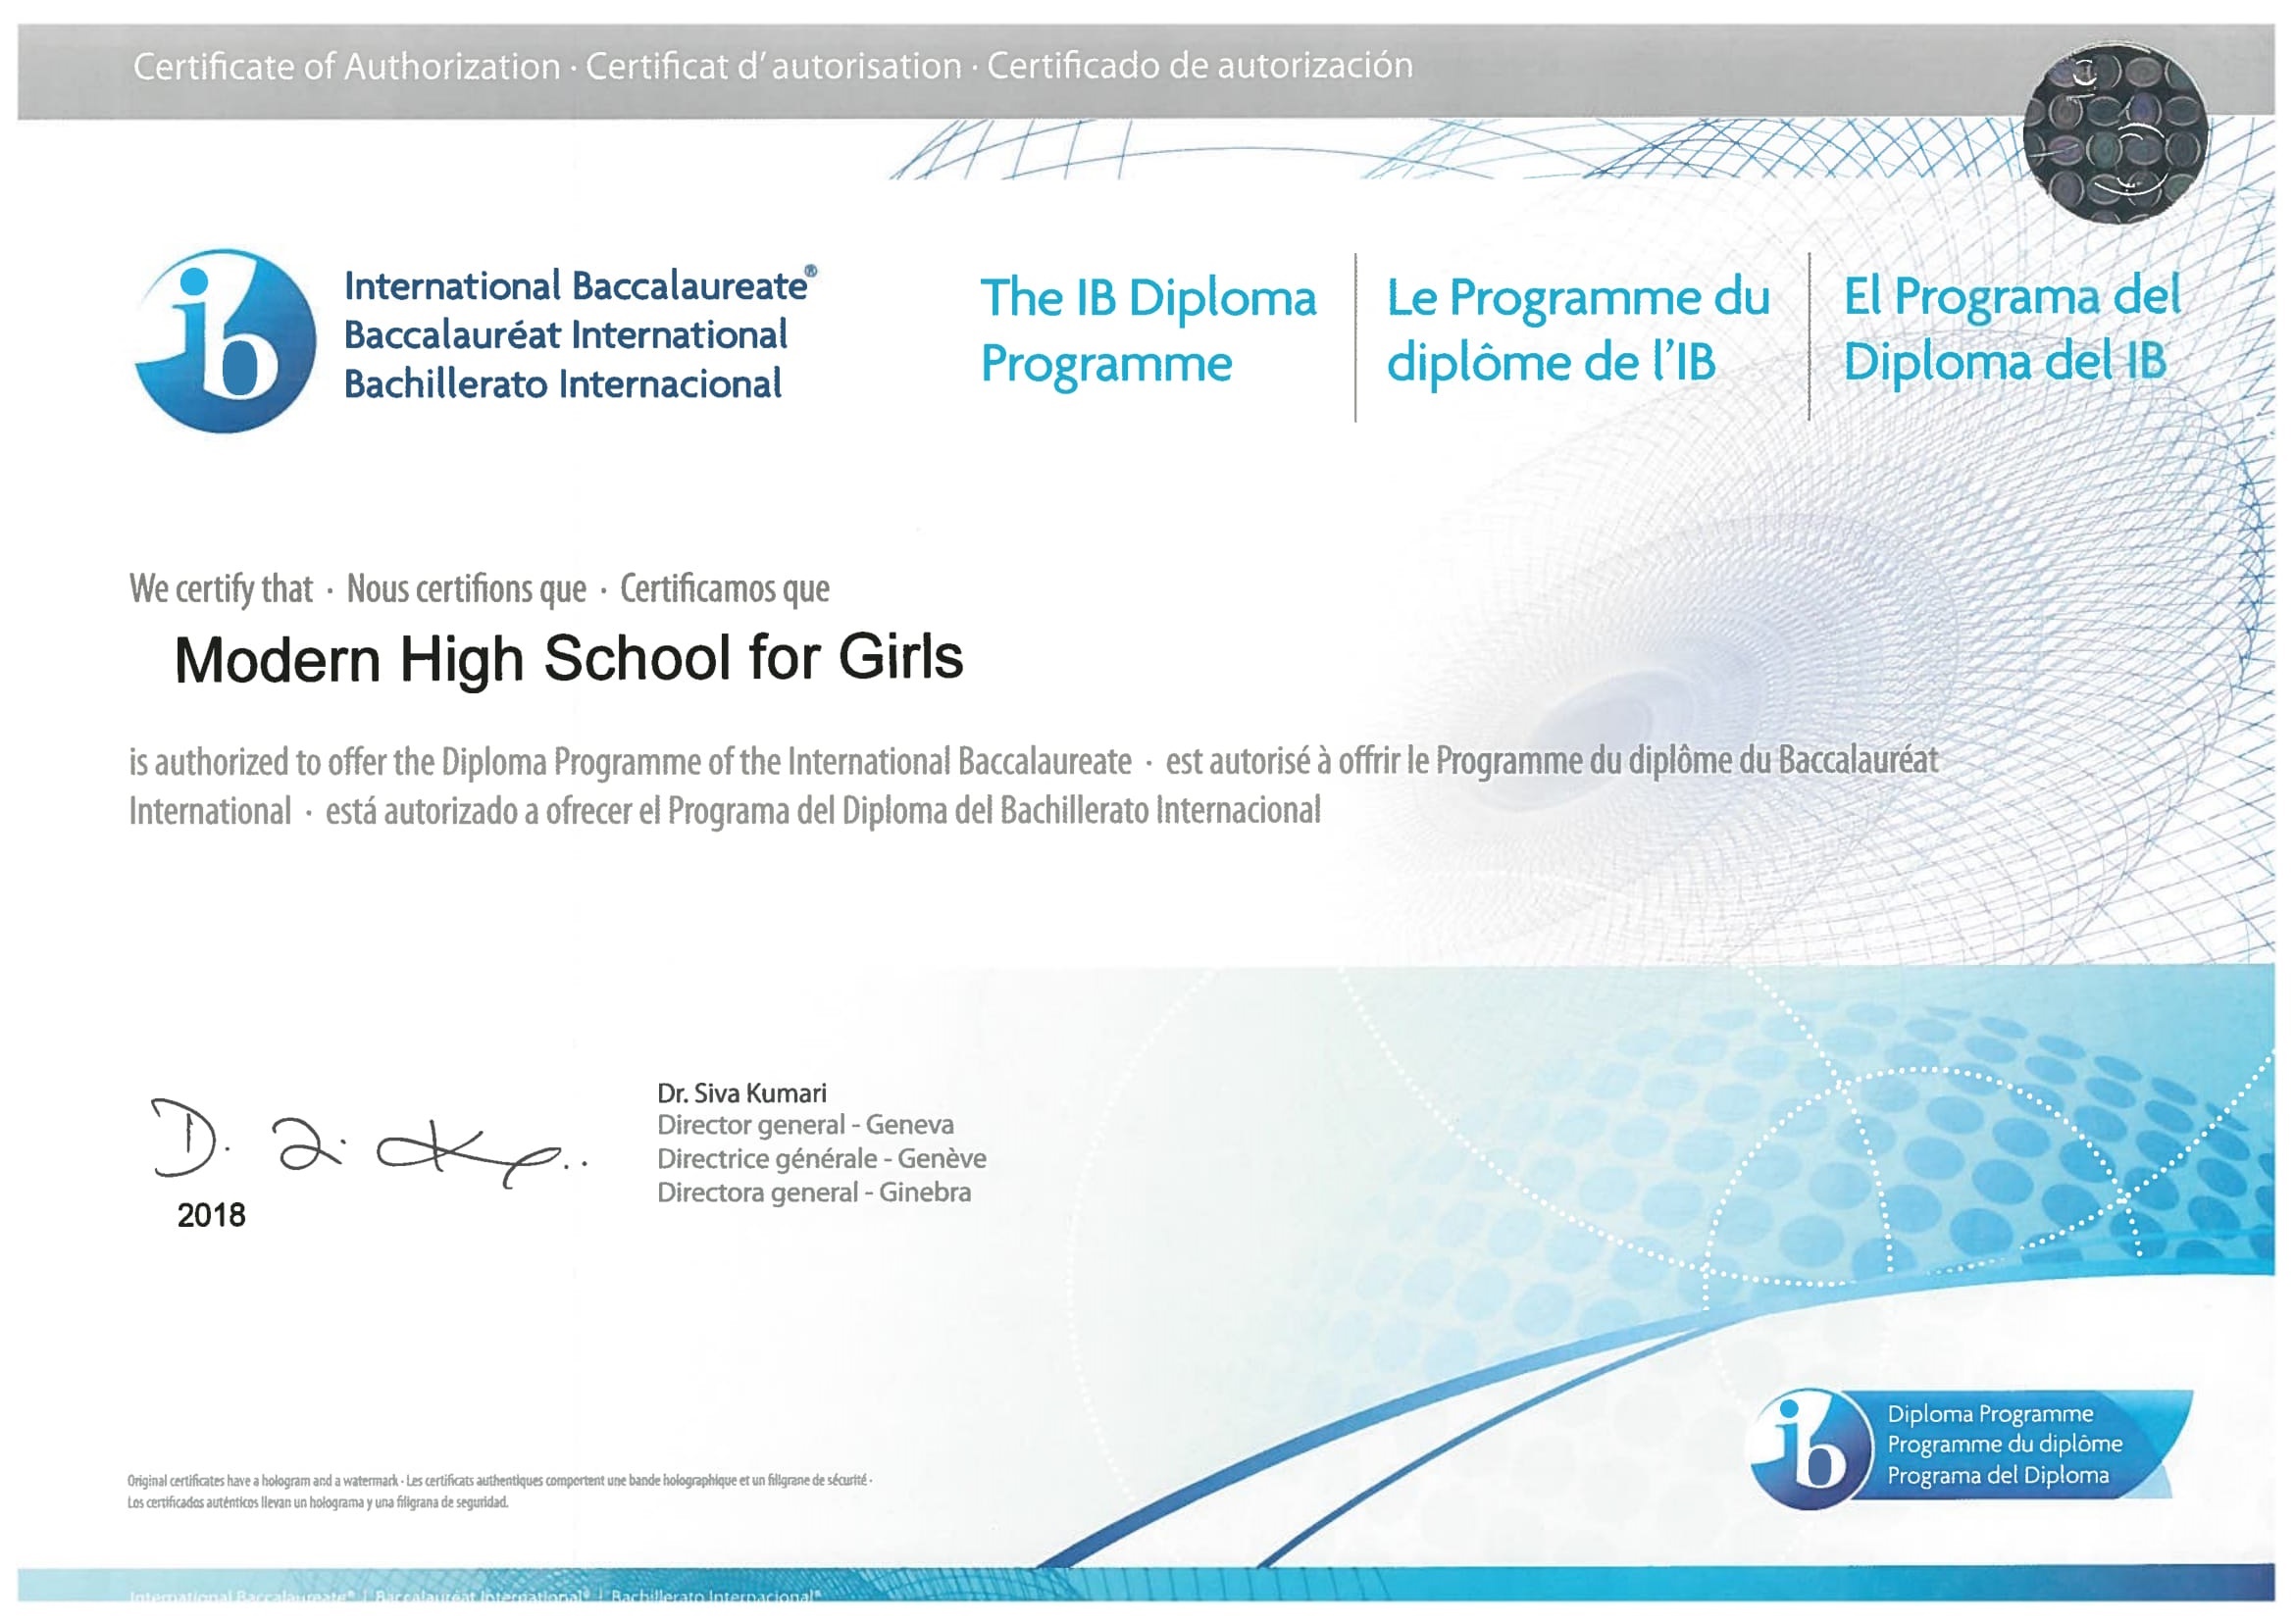 International Baccalaureate Diploma Programme